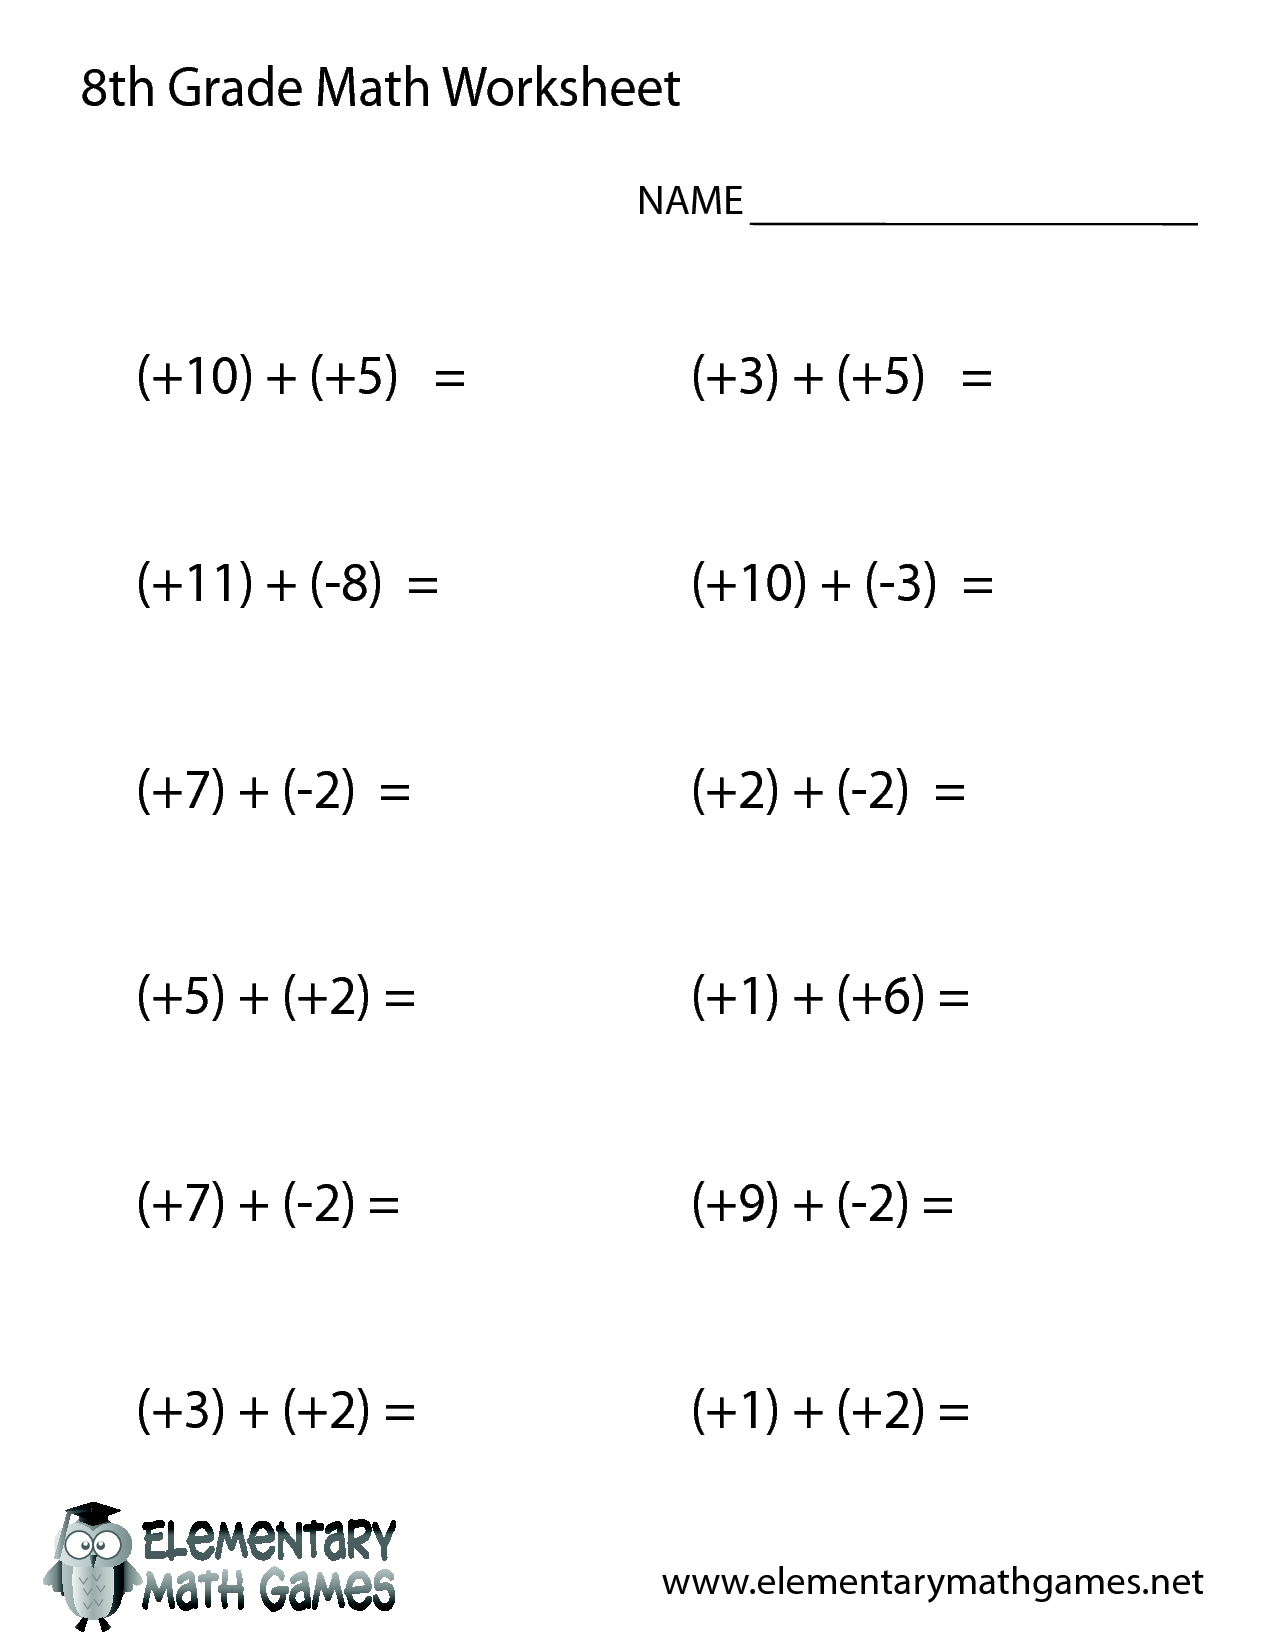 8th Grade Math Worksheets Printable Free Image